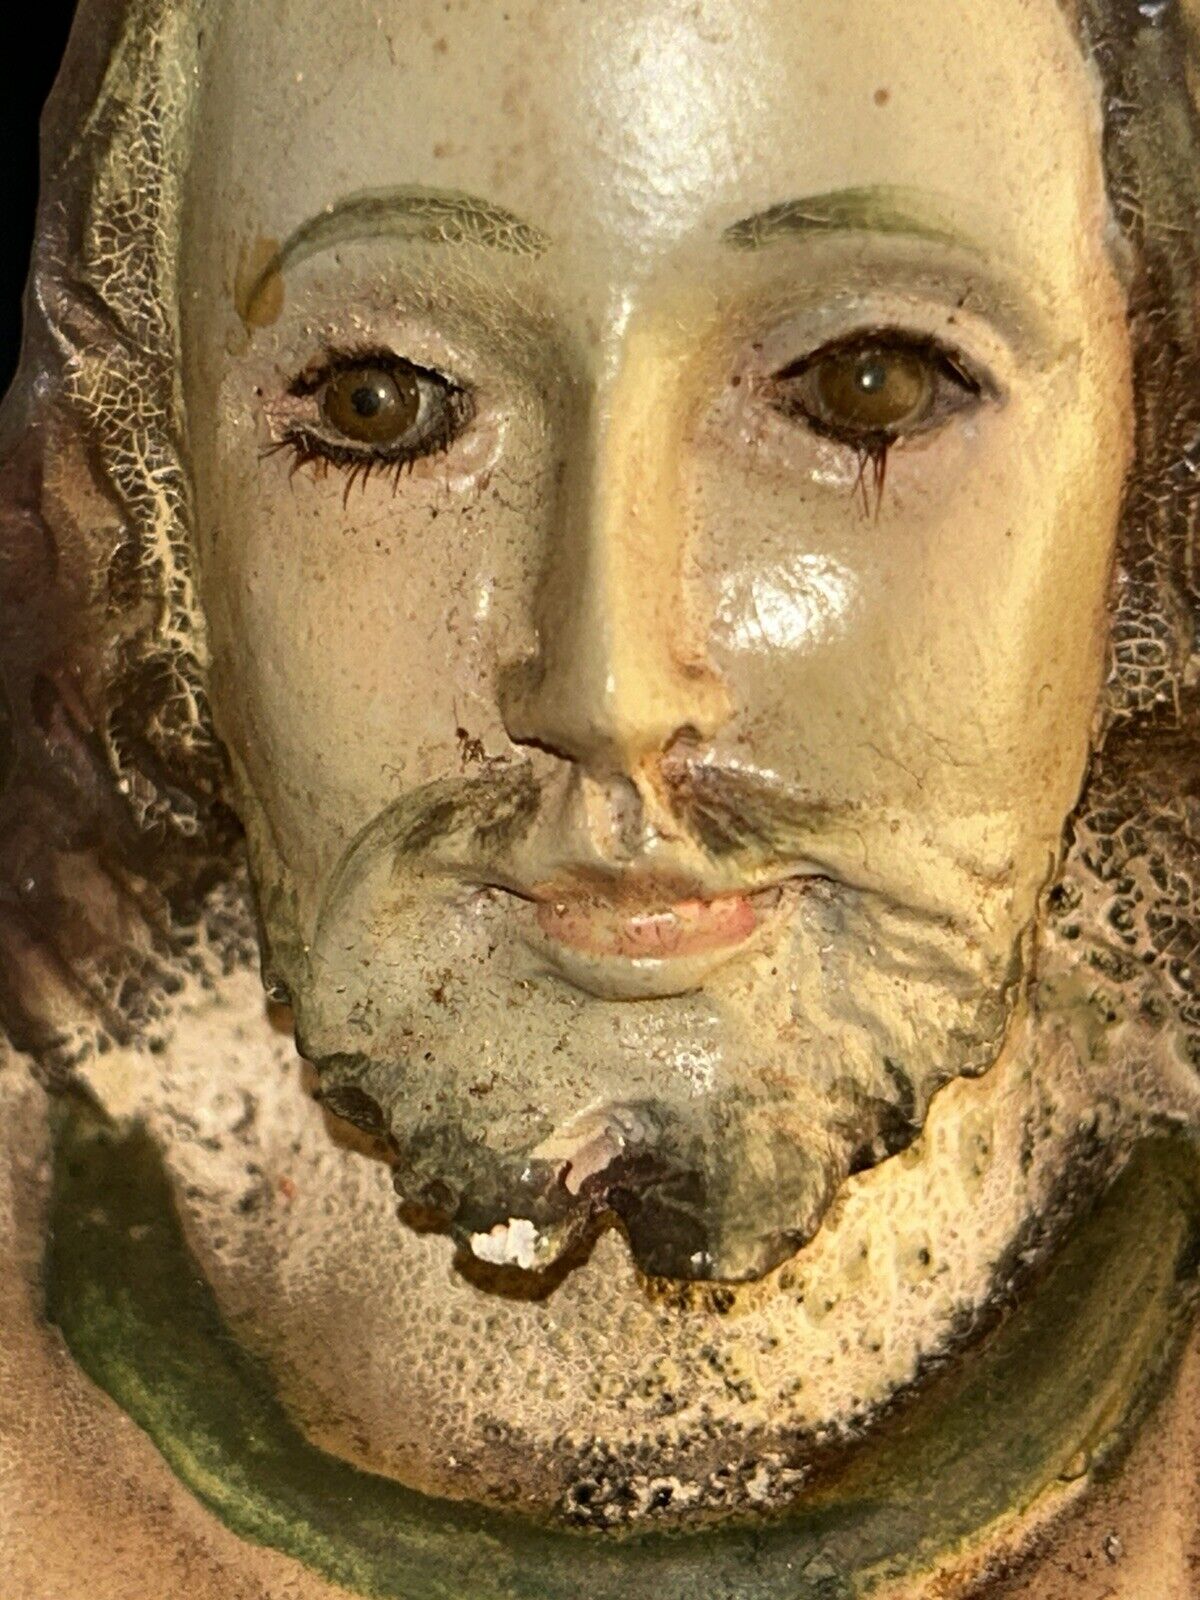 Antique Carved Jesus Religious Statue Glass Eyes Eyelashes 19c Painted Wood 18”